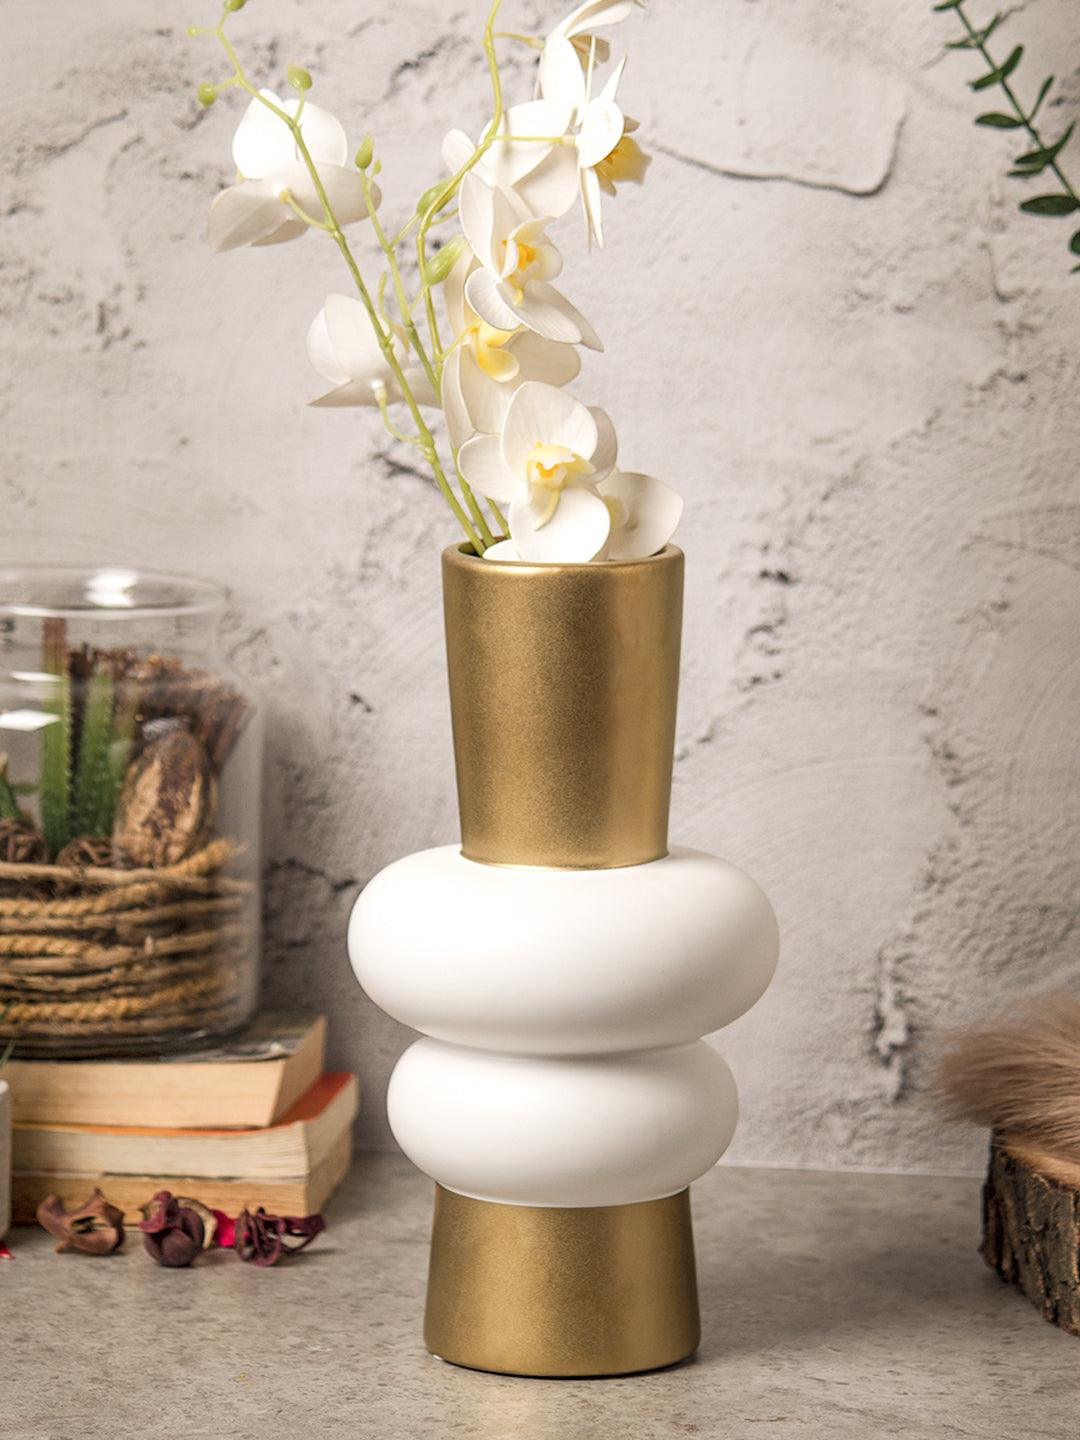 Stylish Ceramic Vase - Wooden, White & Golden, Contemporary Design